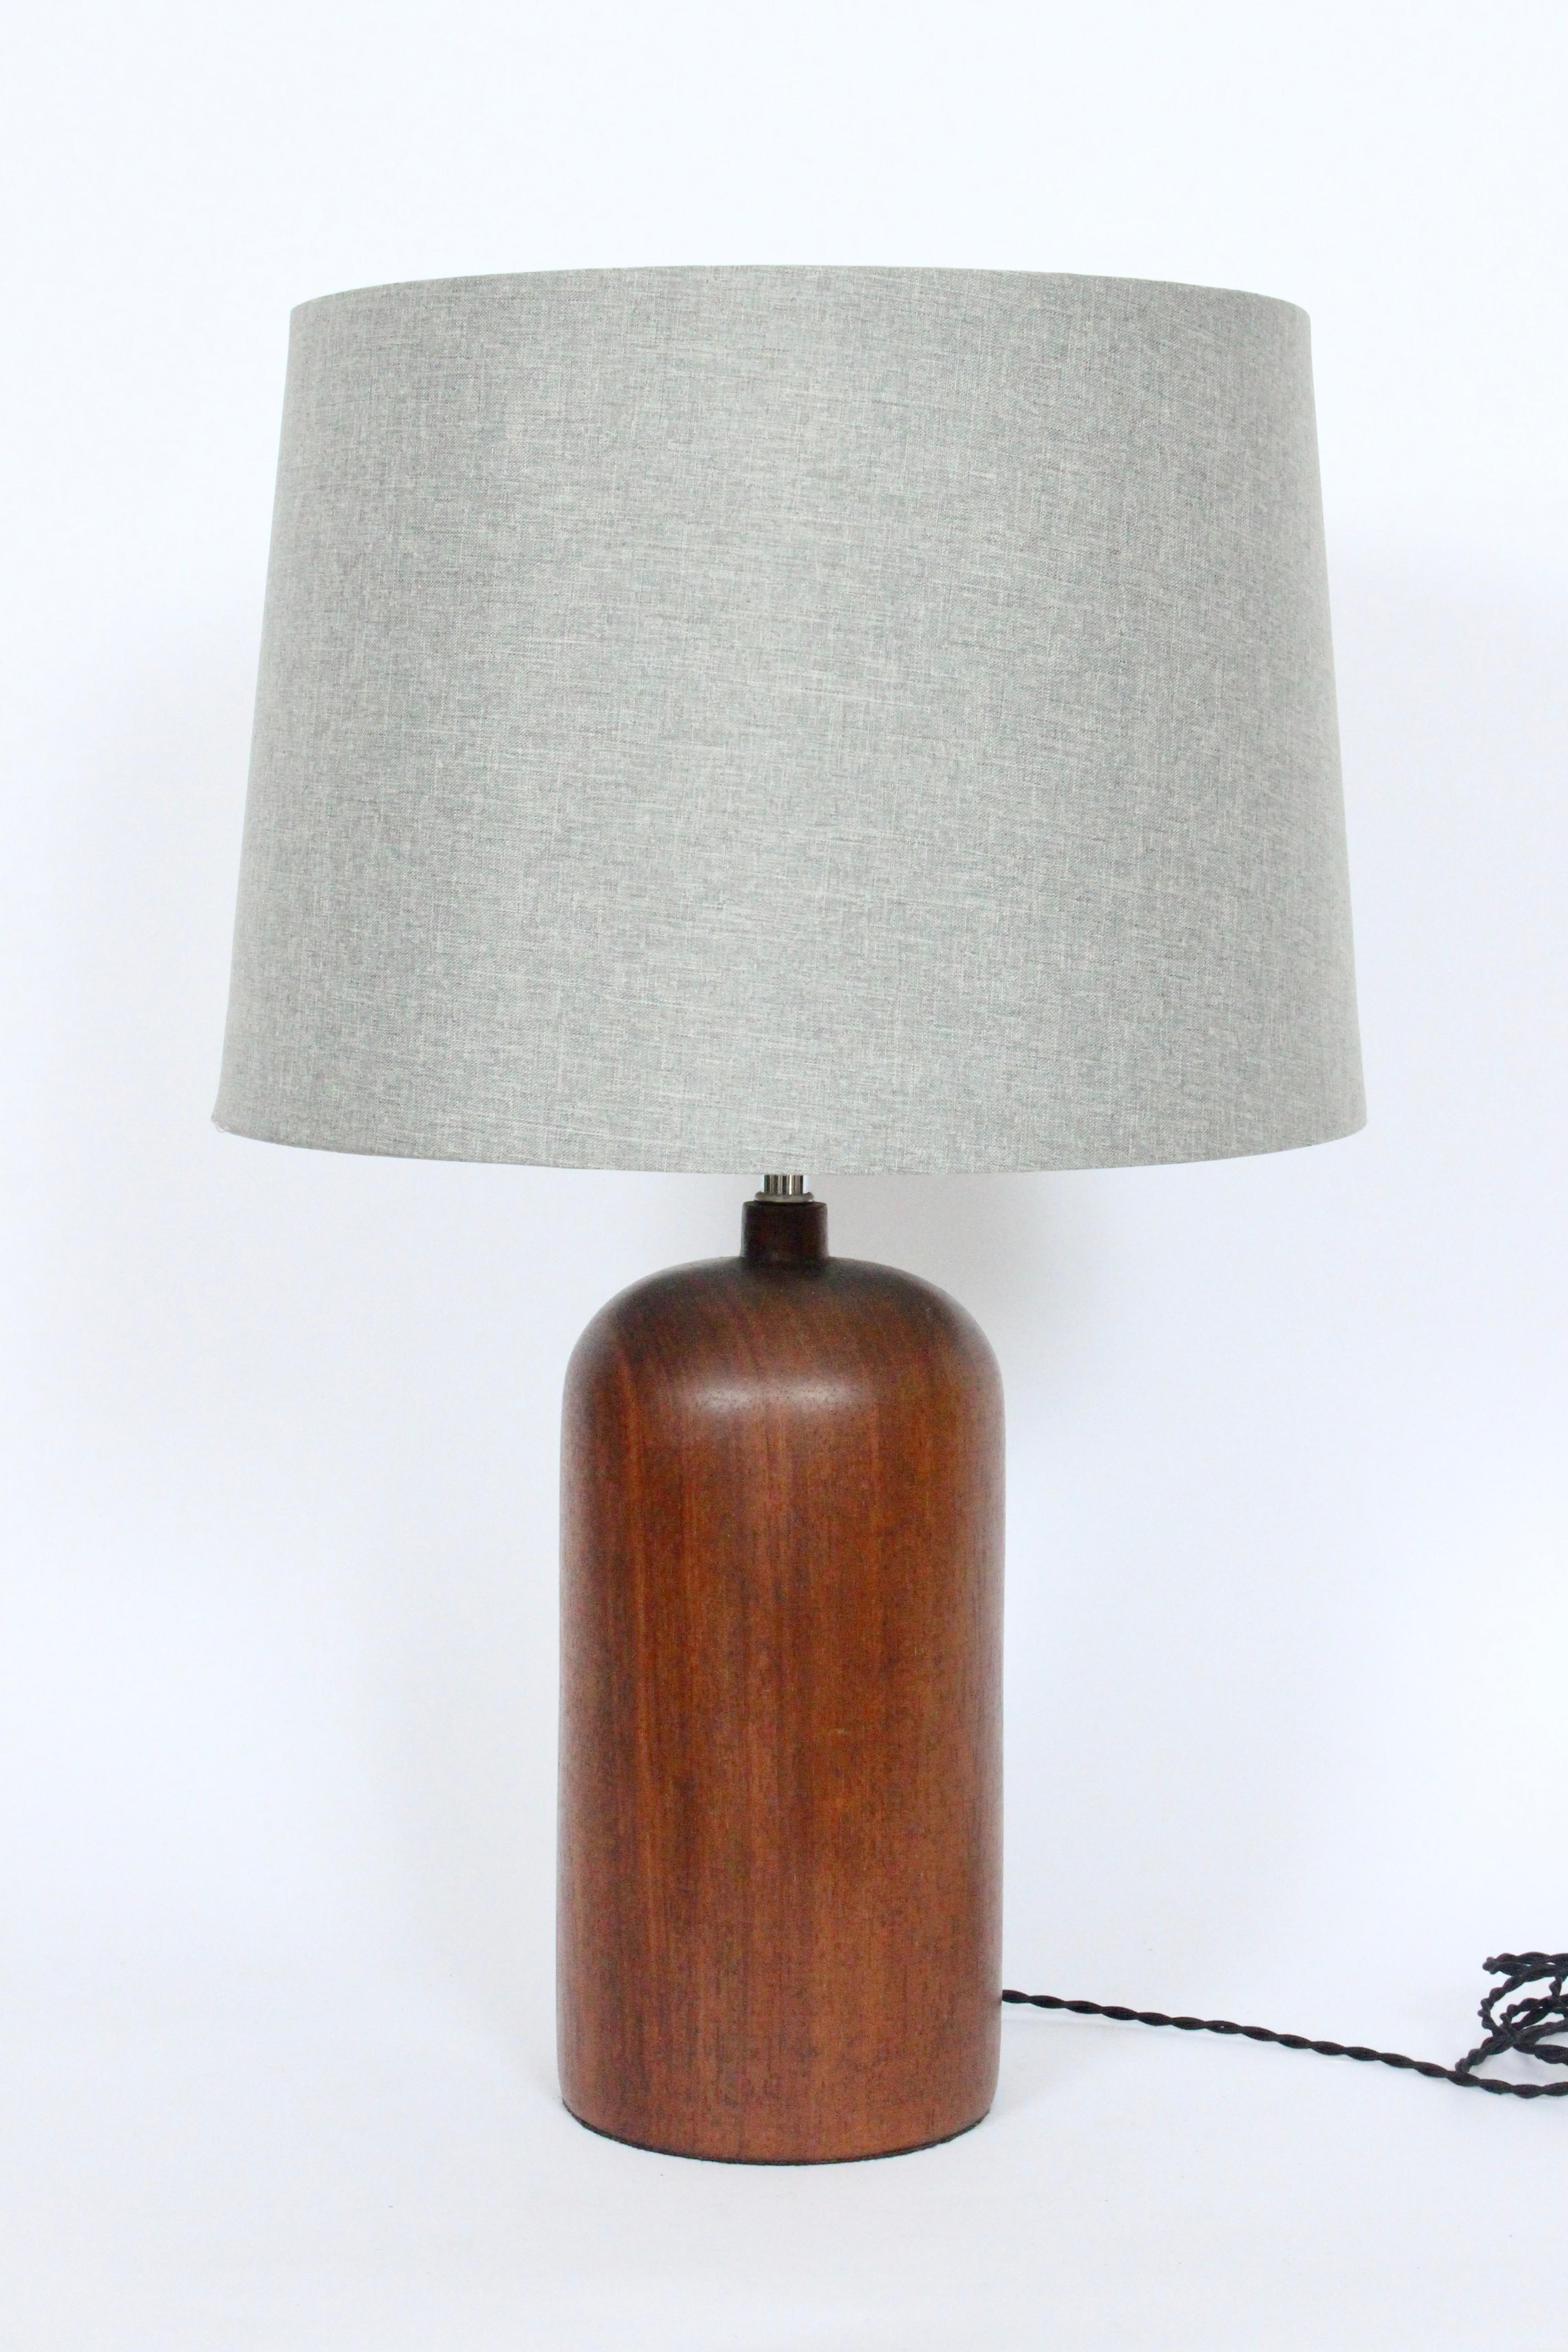 Danish Mid Century Modern Rounded Solid Dark Teak Table Lamp, 1960's For Sale 4